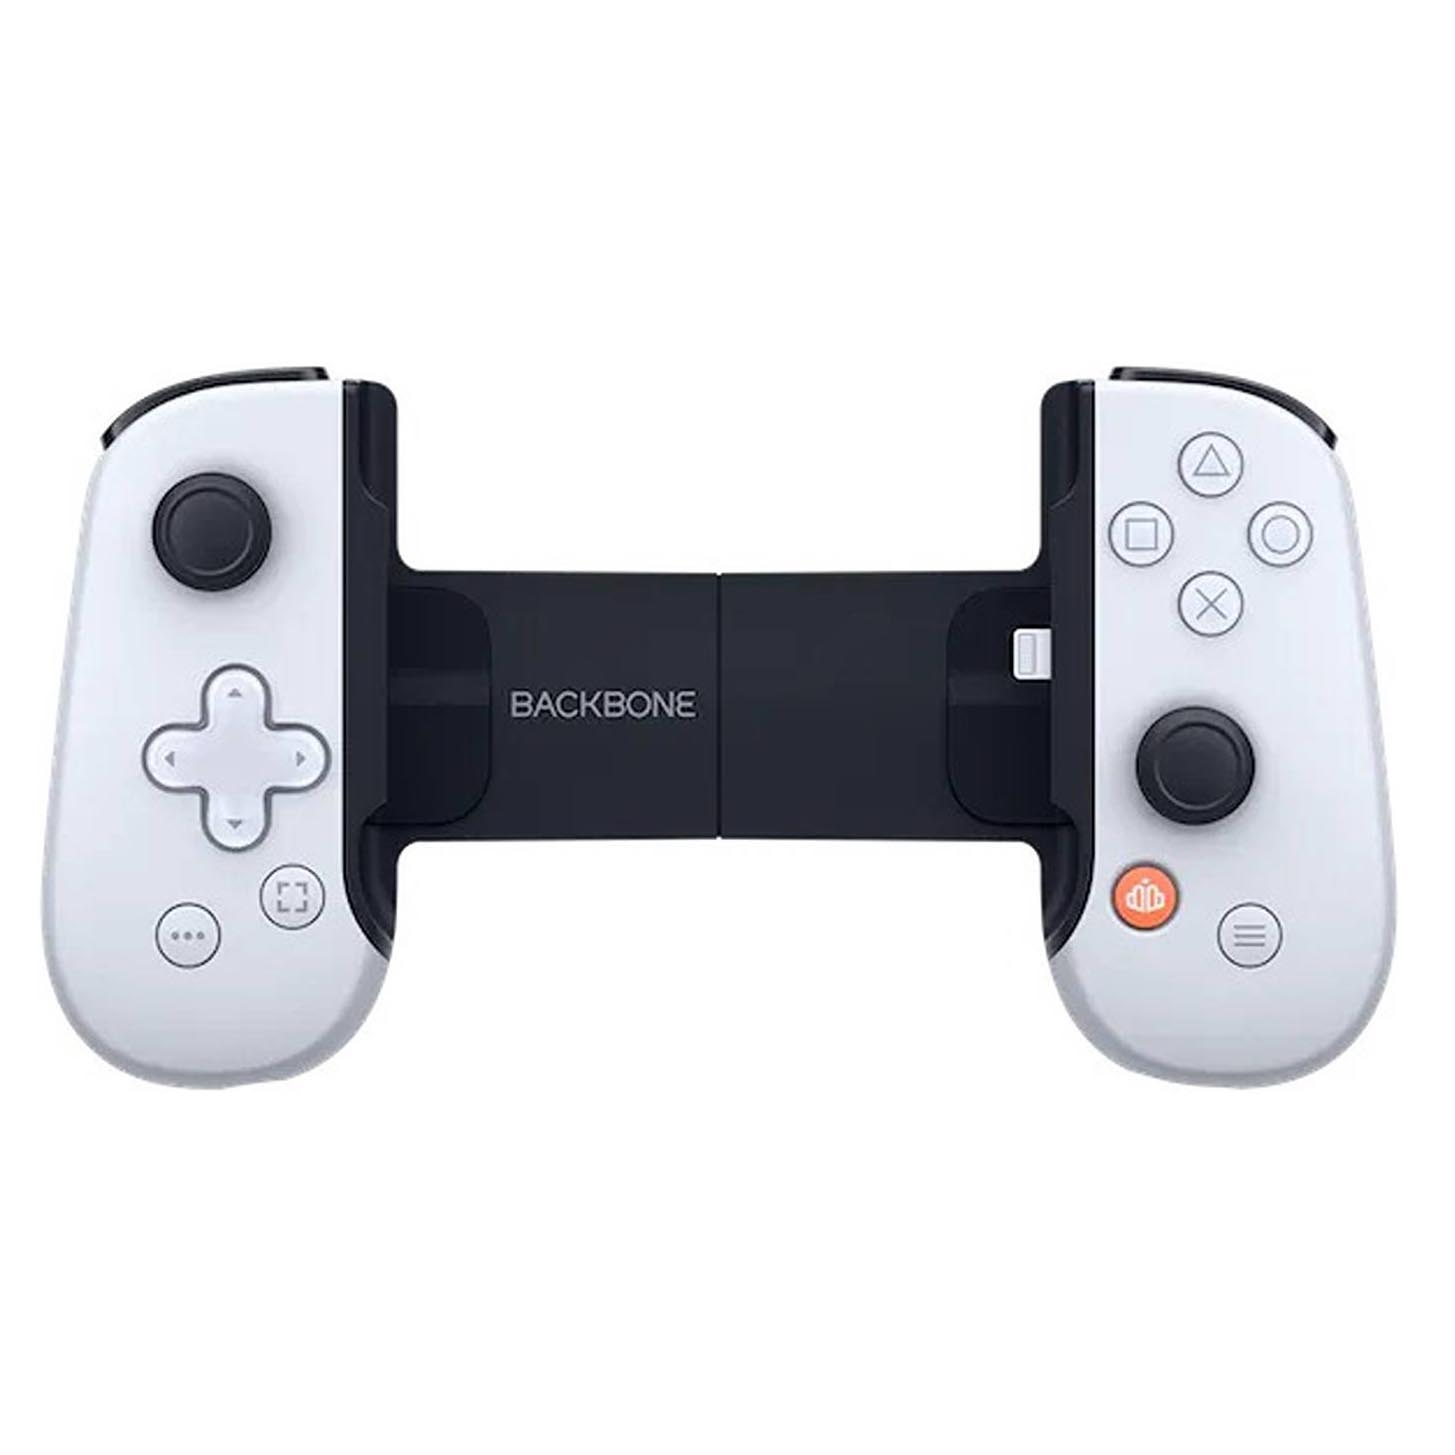 Геймпад Backbone One для смартфона Playstation версия (Lightning), белый геймпад hori horipad mini – pikachu black